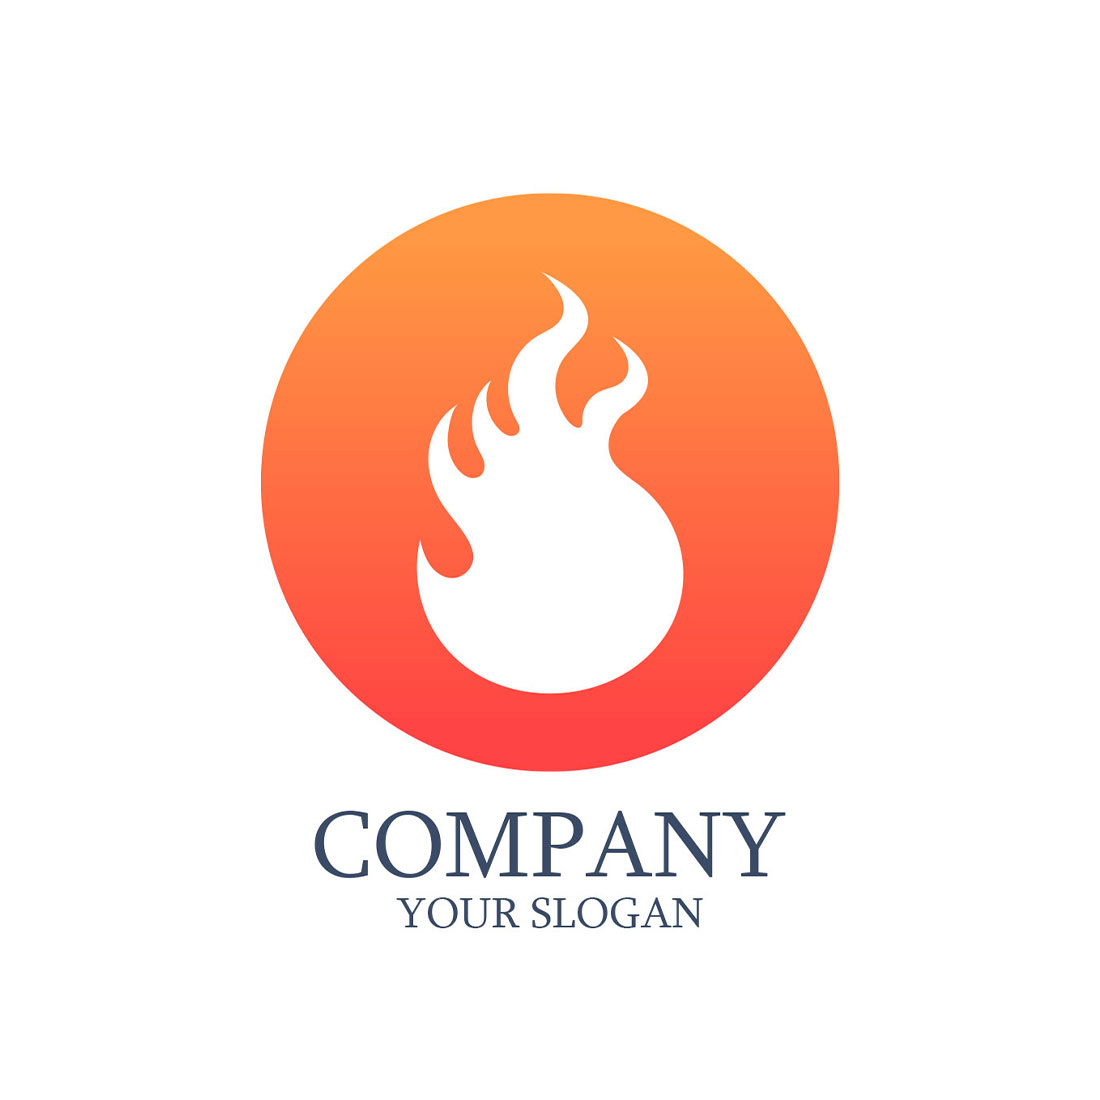 Lit Fire Flame Gradient Logo Vector Illustration main cover.